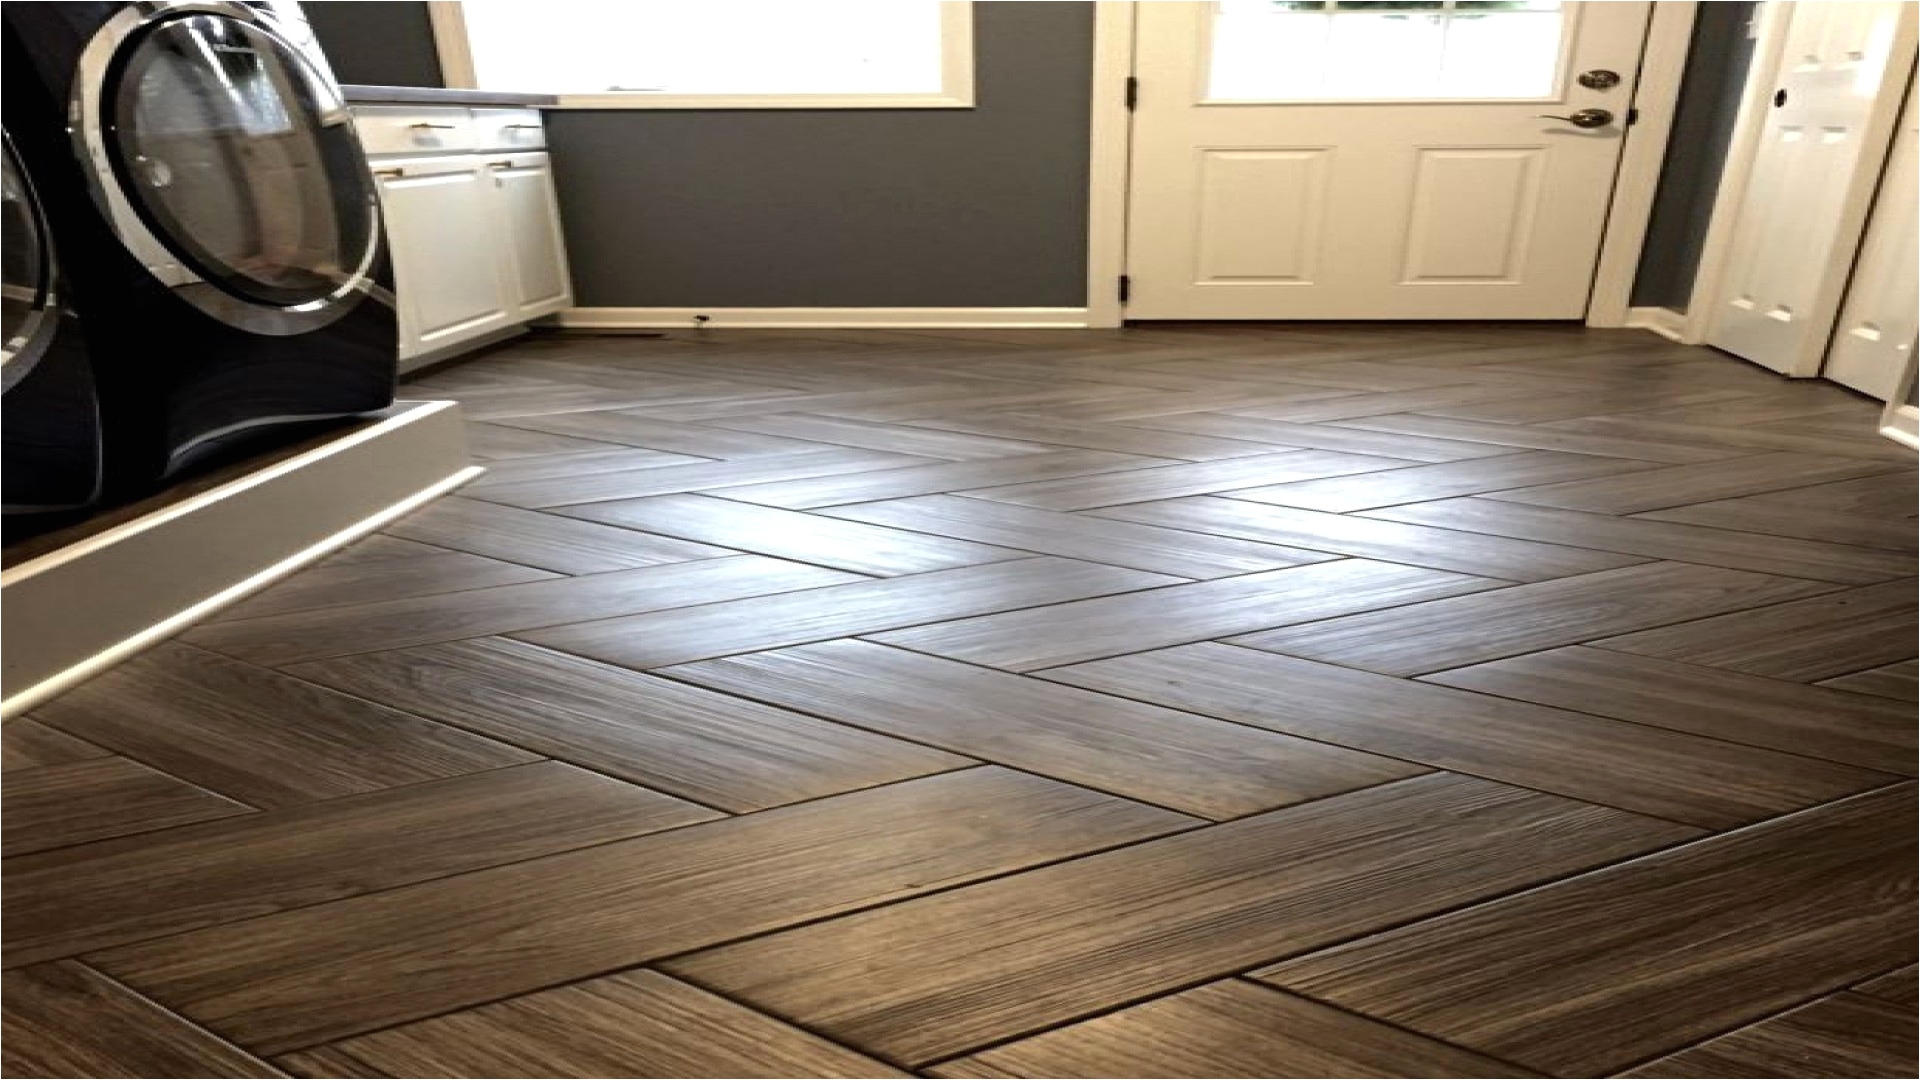 Rubber Flooring Tiles for Kitchen 50 New Rubber Floor Tiles Pics 50 Photos Home Improvement